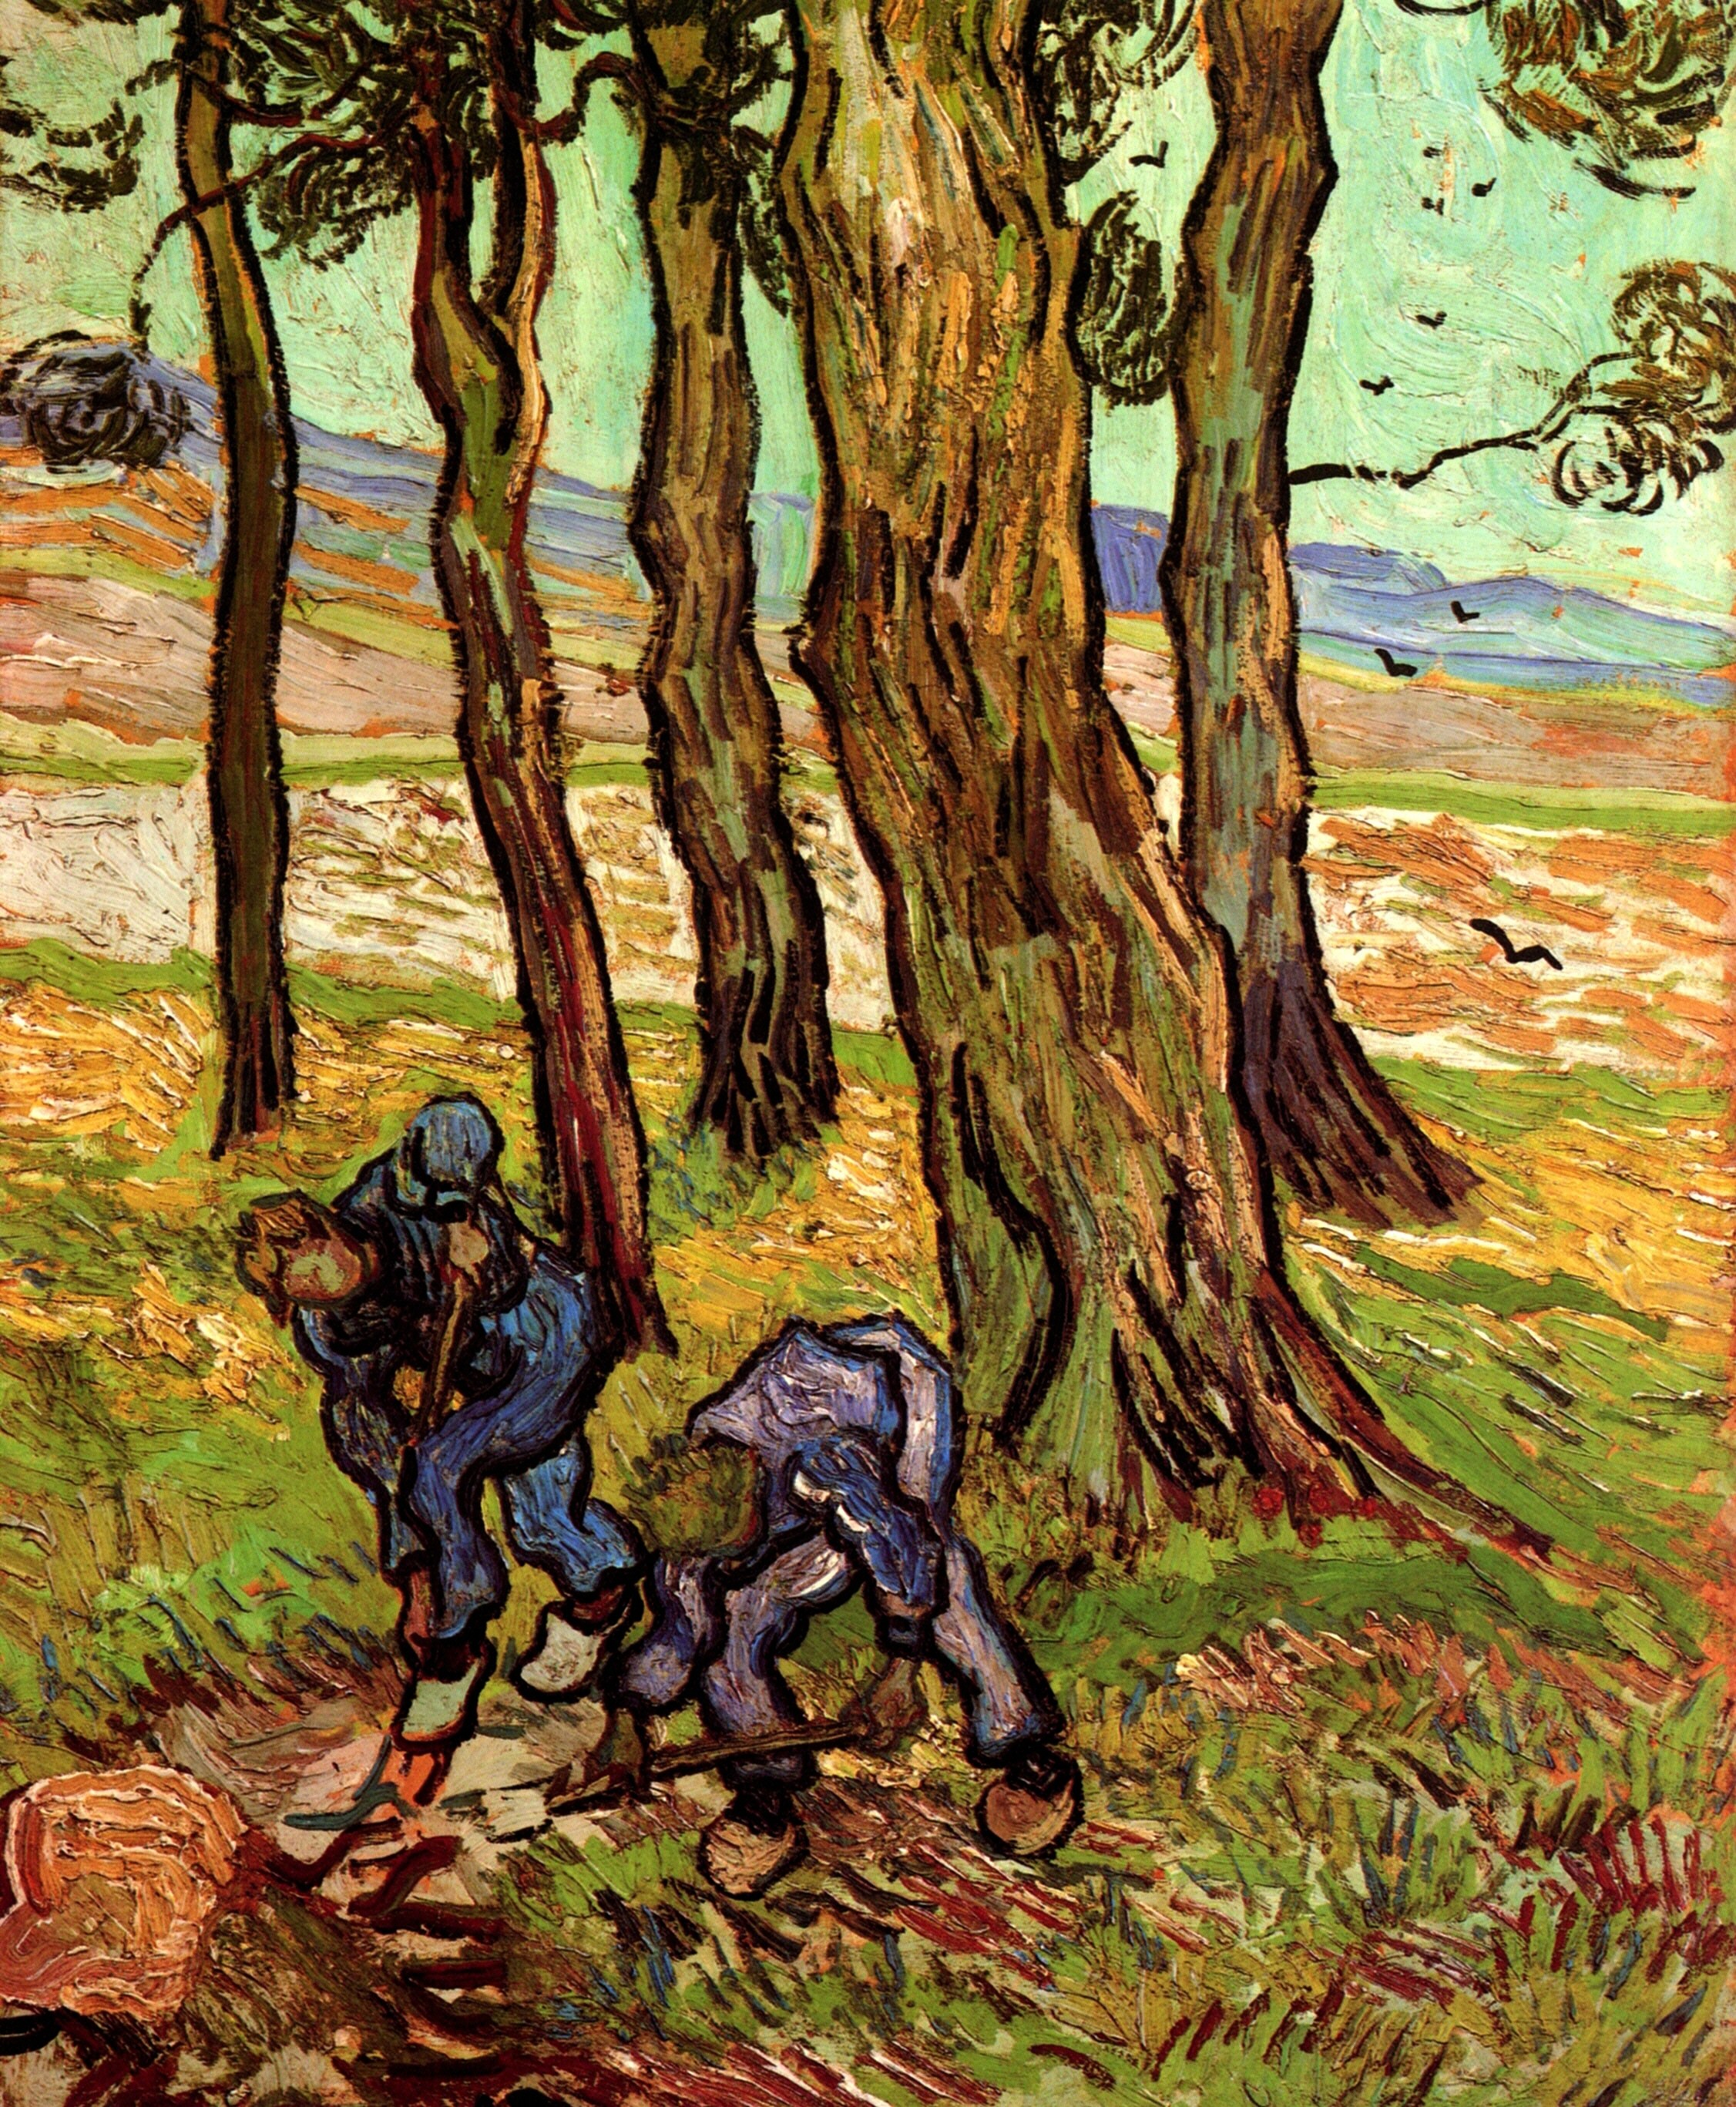 Картина Ван Гога Два землекопа среди деревьев 1889